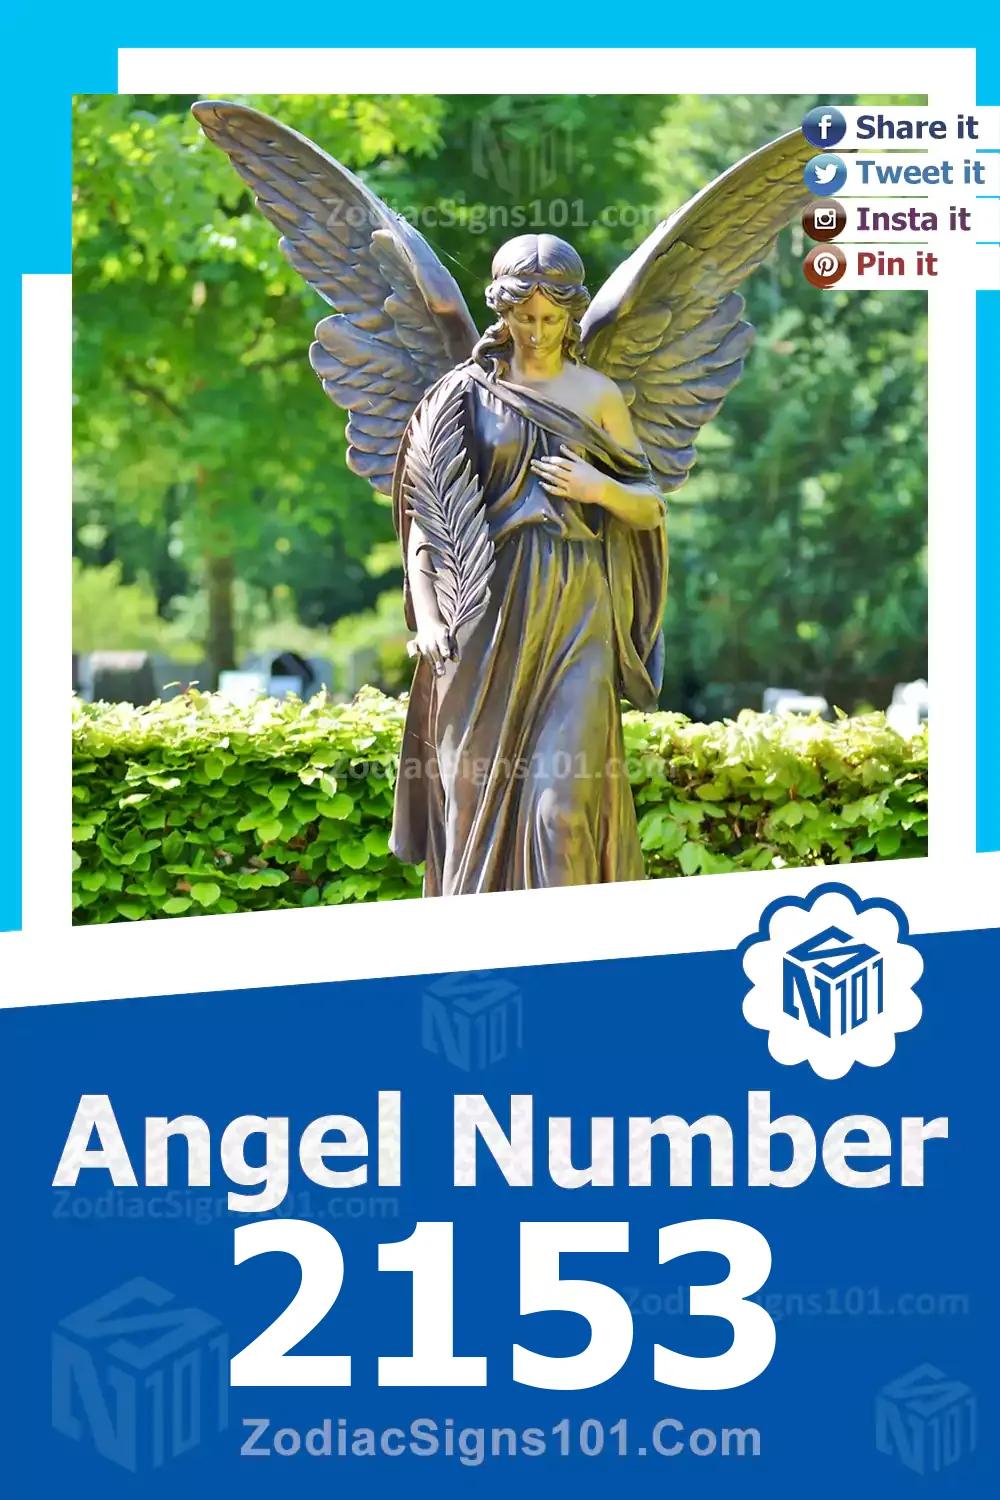 2153-Angel-Number-Meaning.jpg